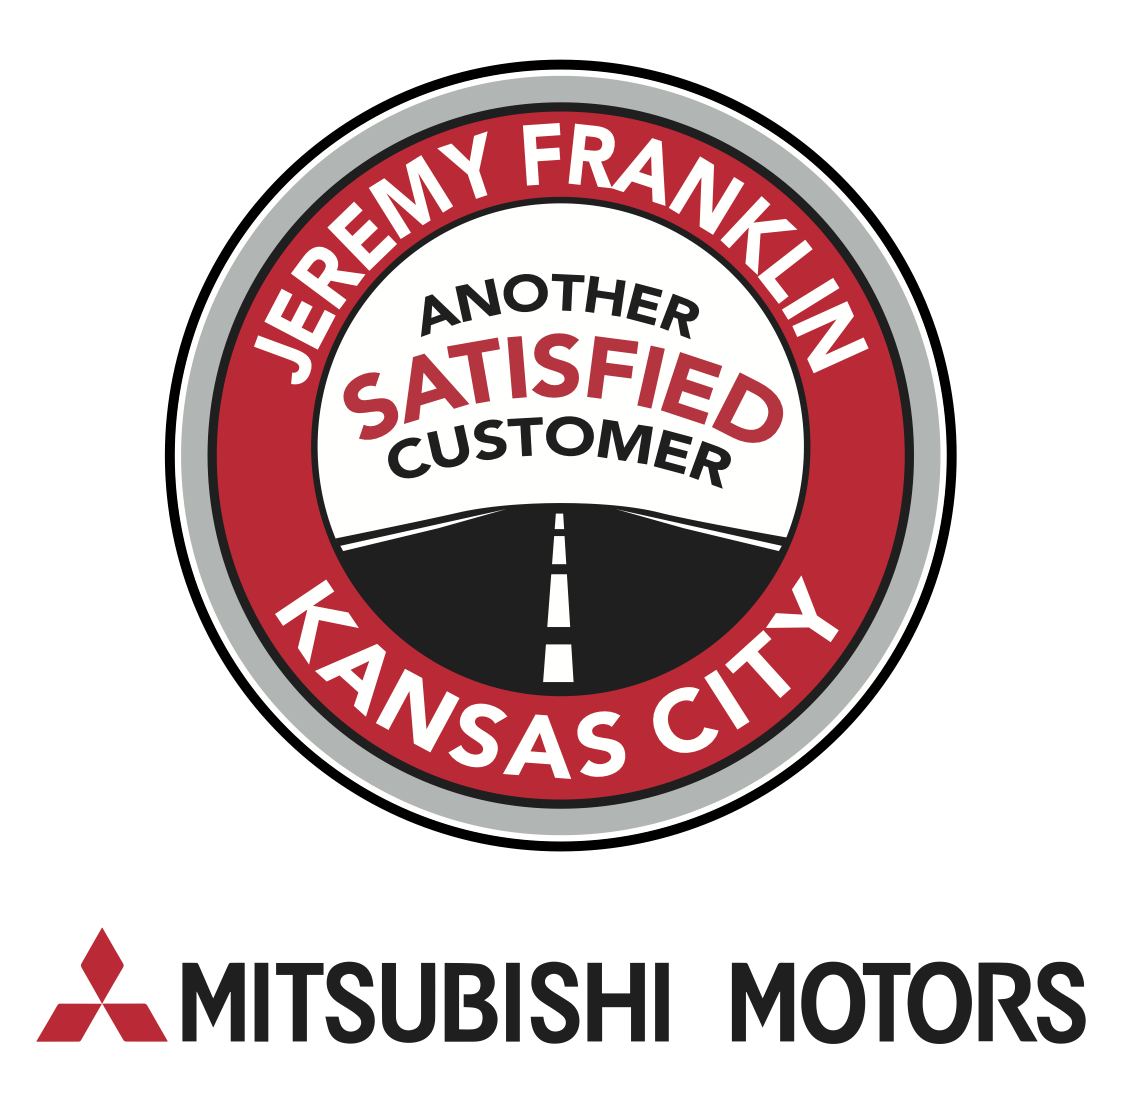 Jeremy Franklin Mitsubishi - Kansas City, MO: Read Consumer reviews